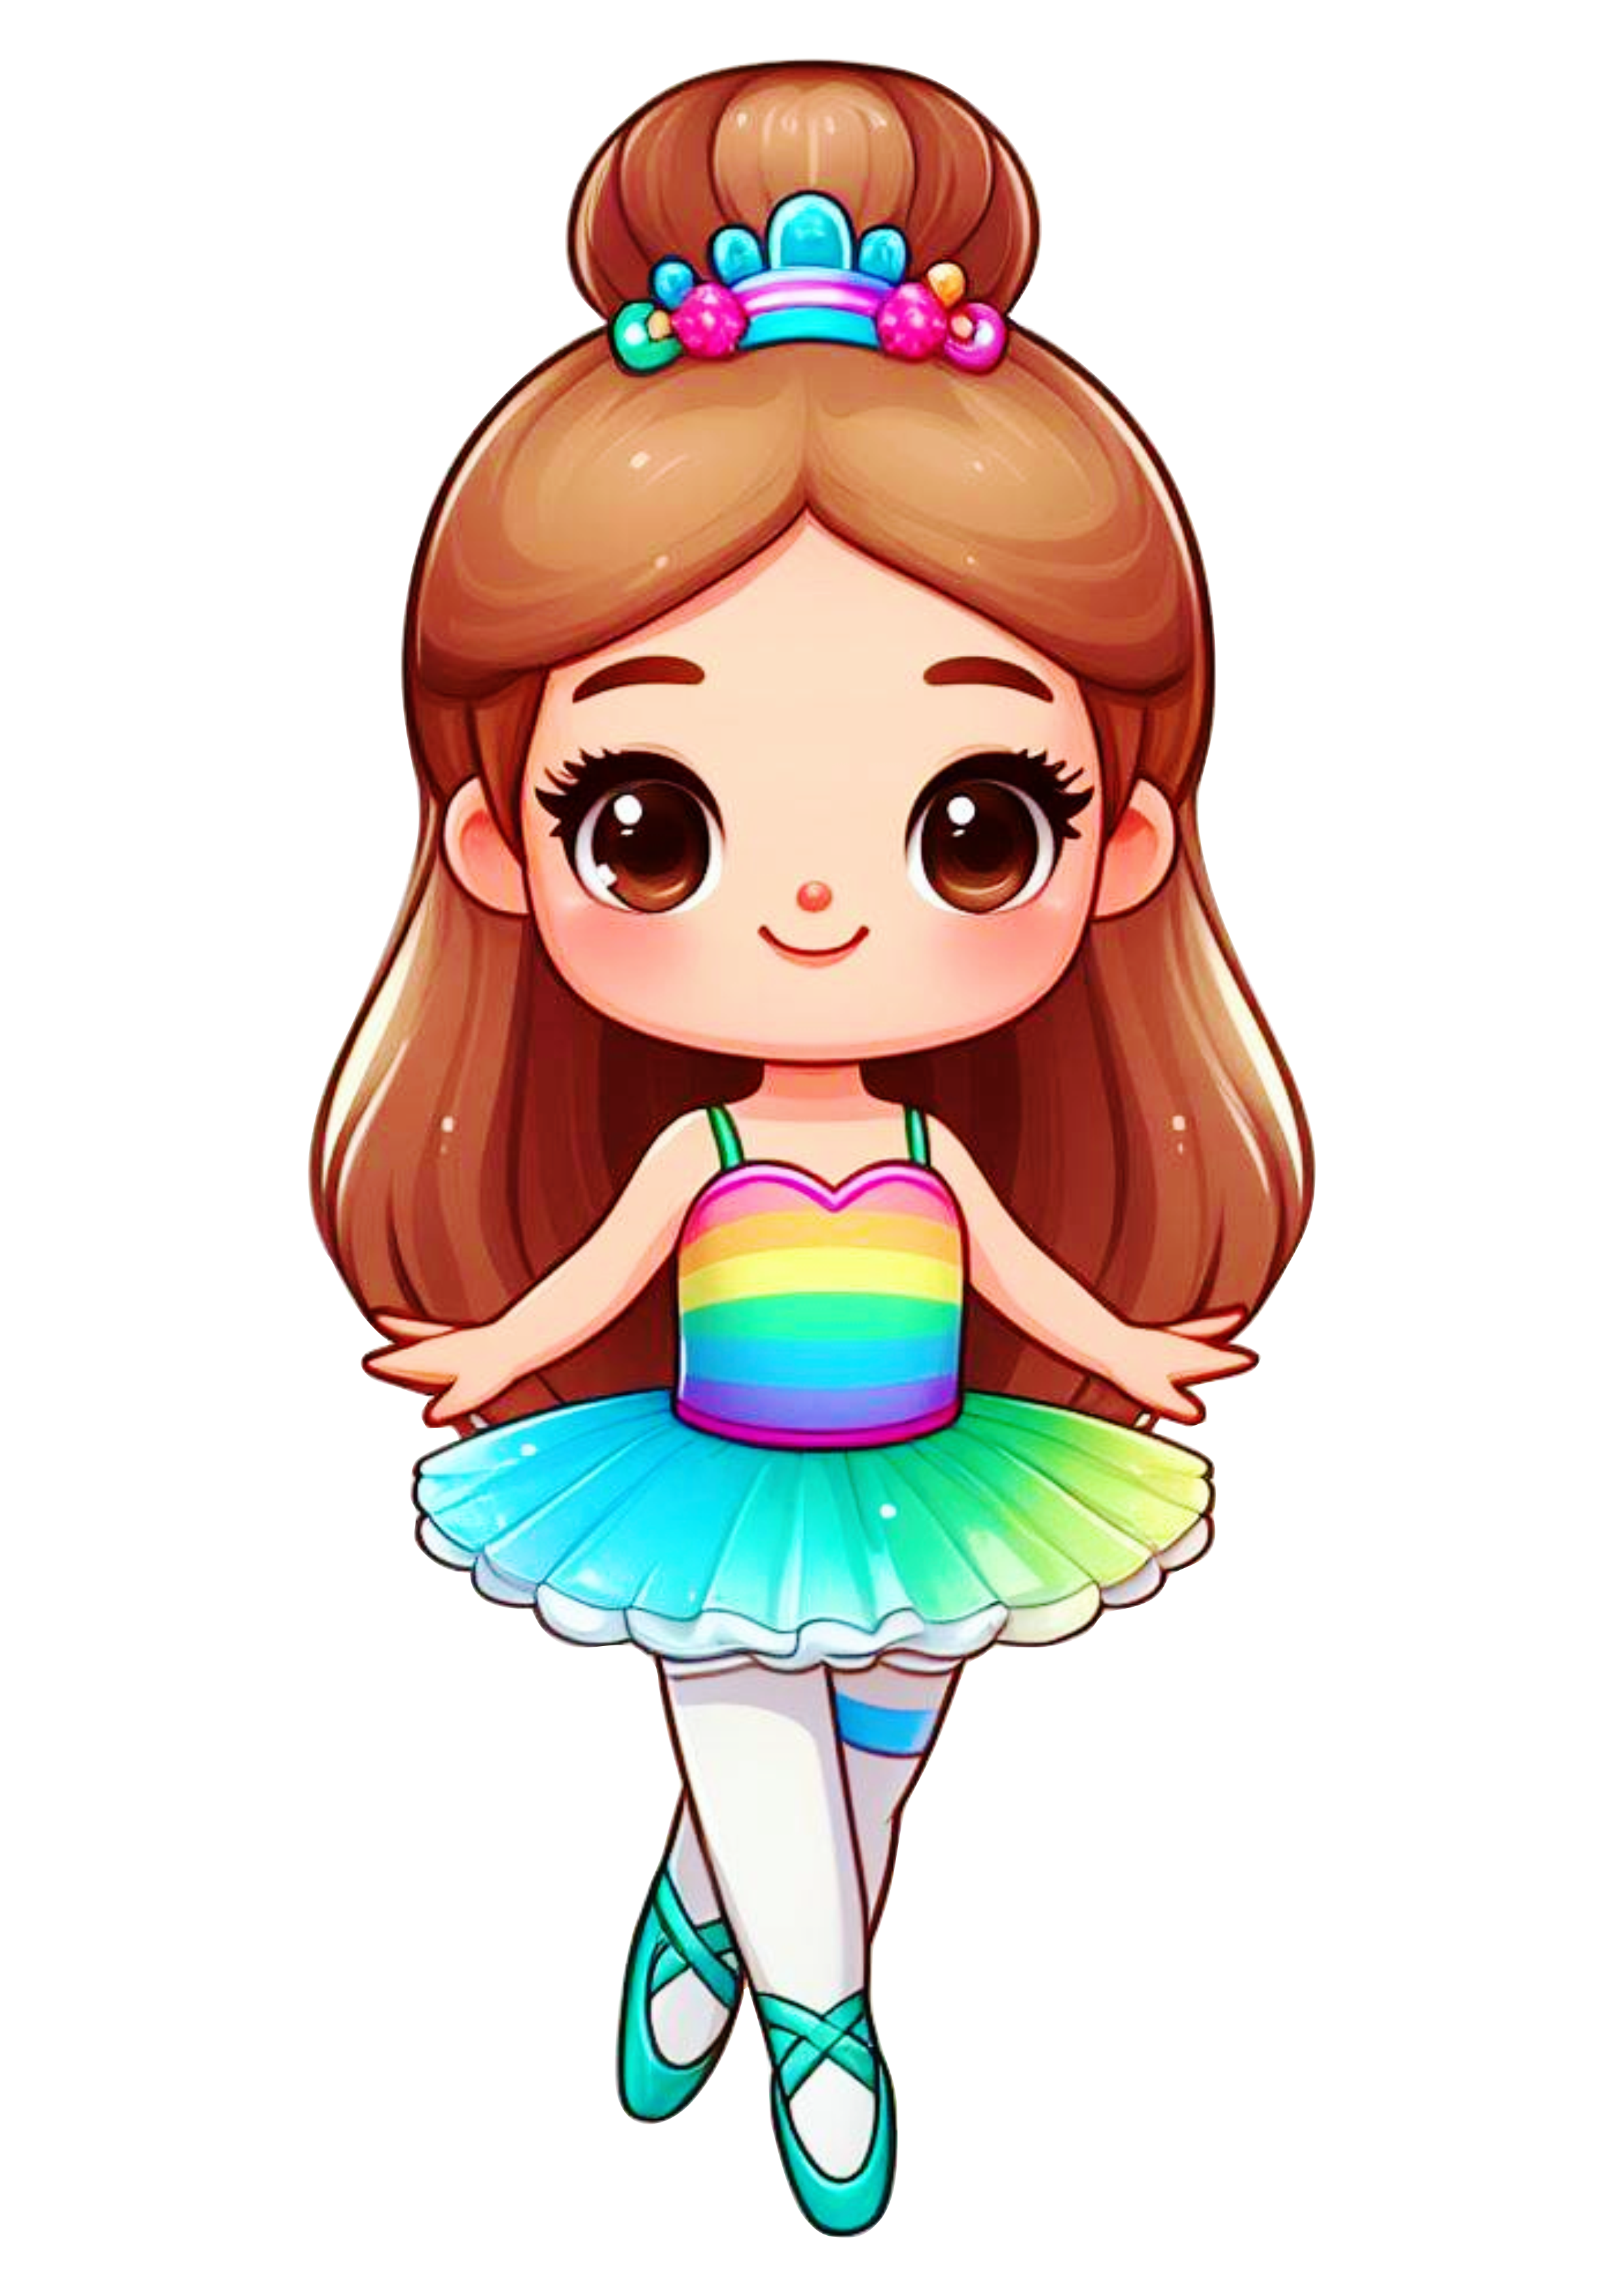 Bailarina menina fofinha com roupa colorida arco-íris png